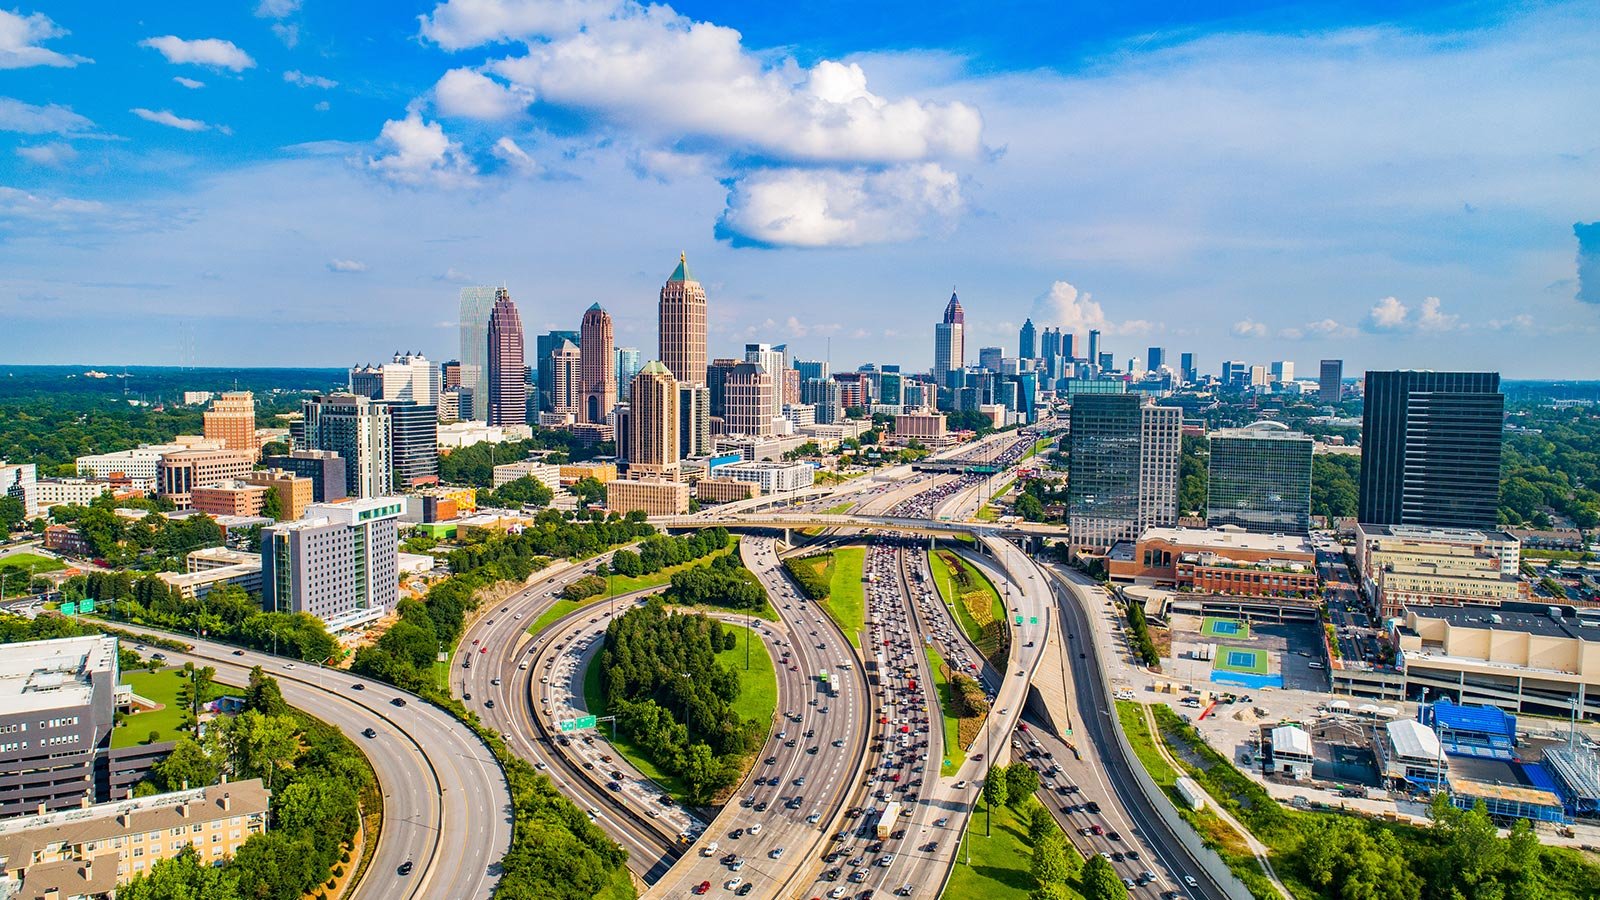 Atlanta, Georgia skyline from aerial view